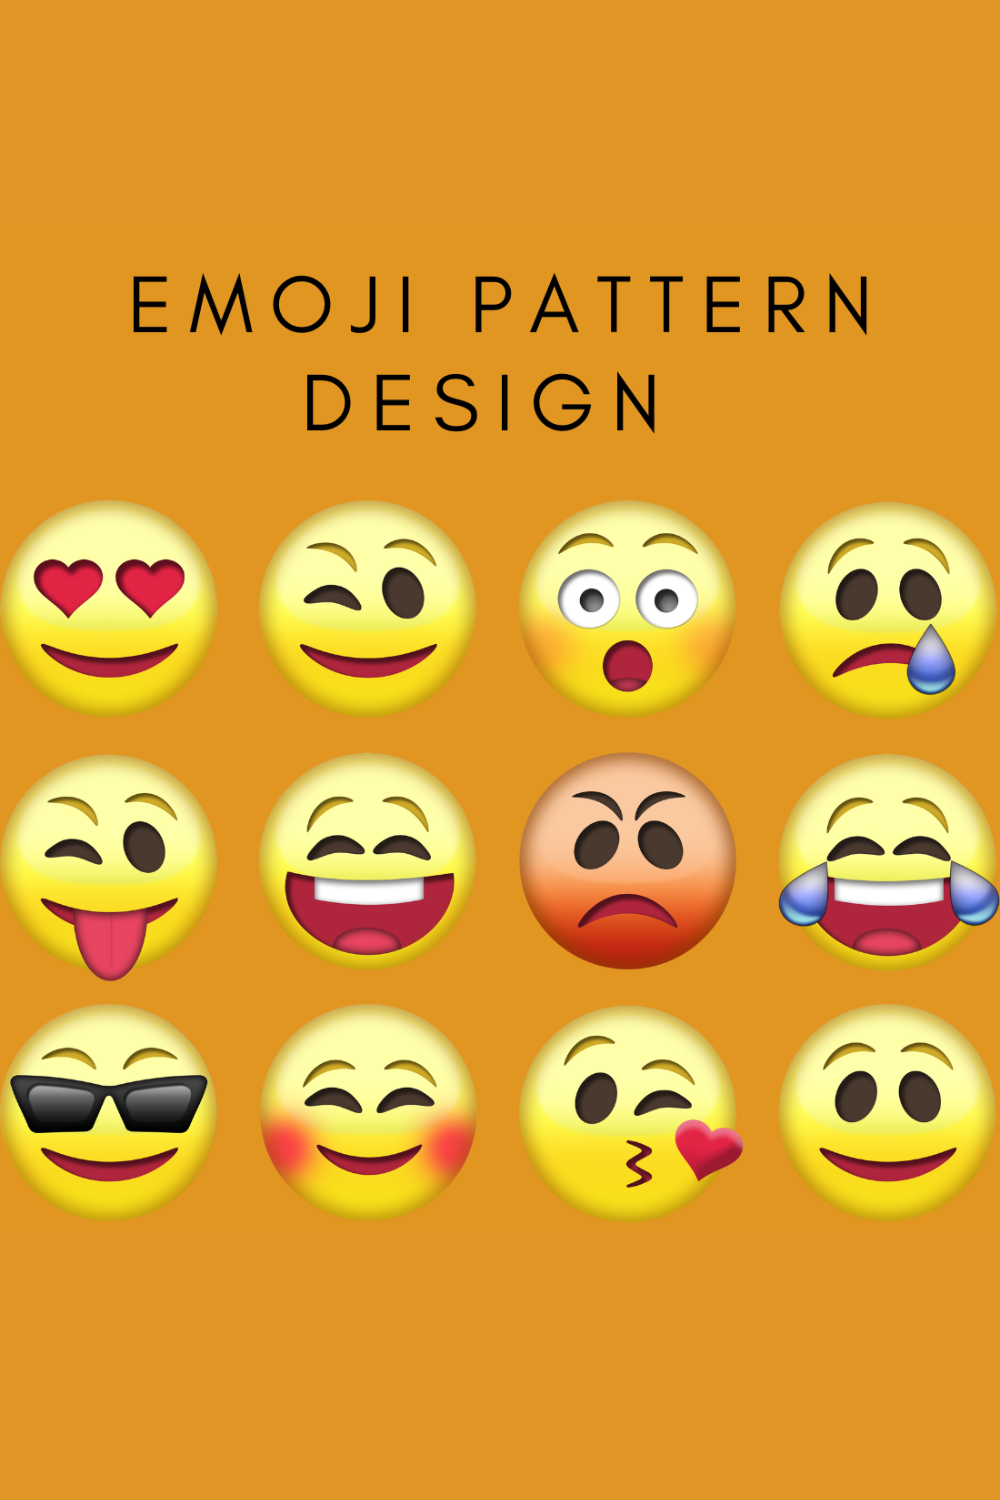 Emoji Pattern Design Bundle pinterest image.